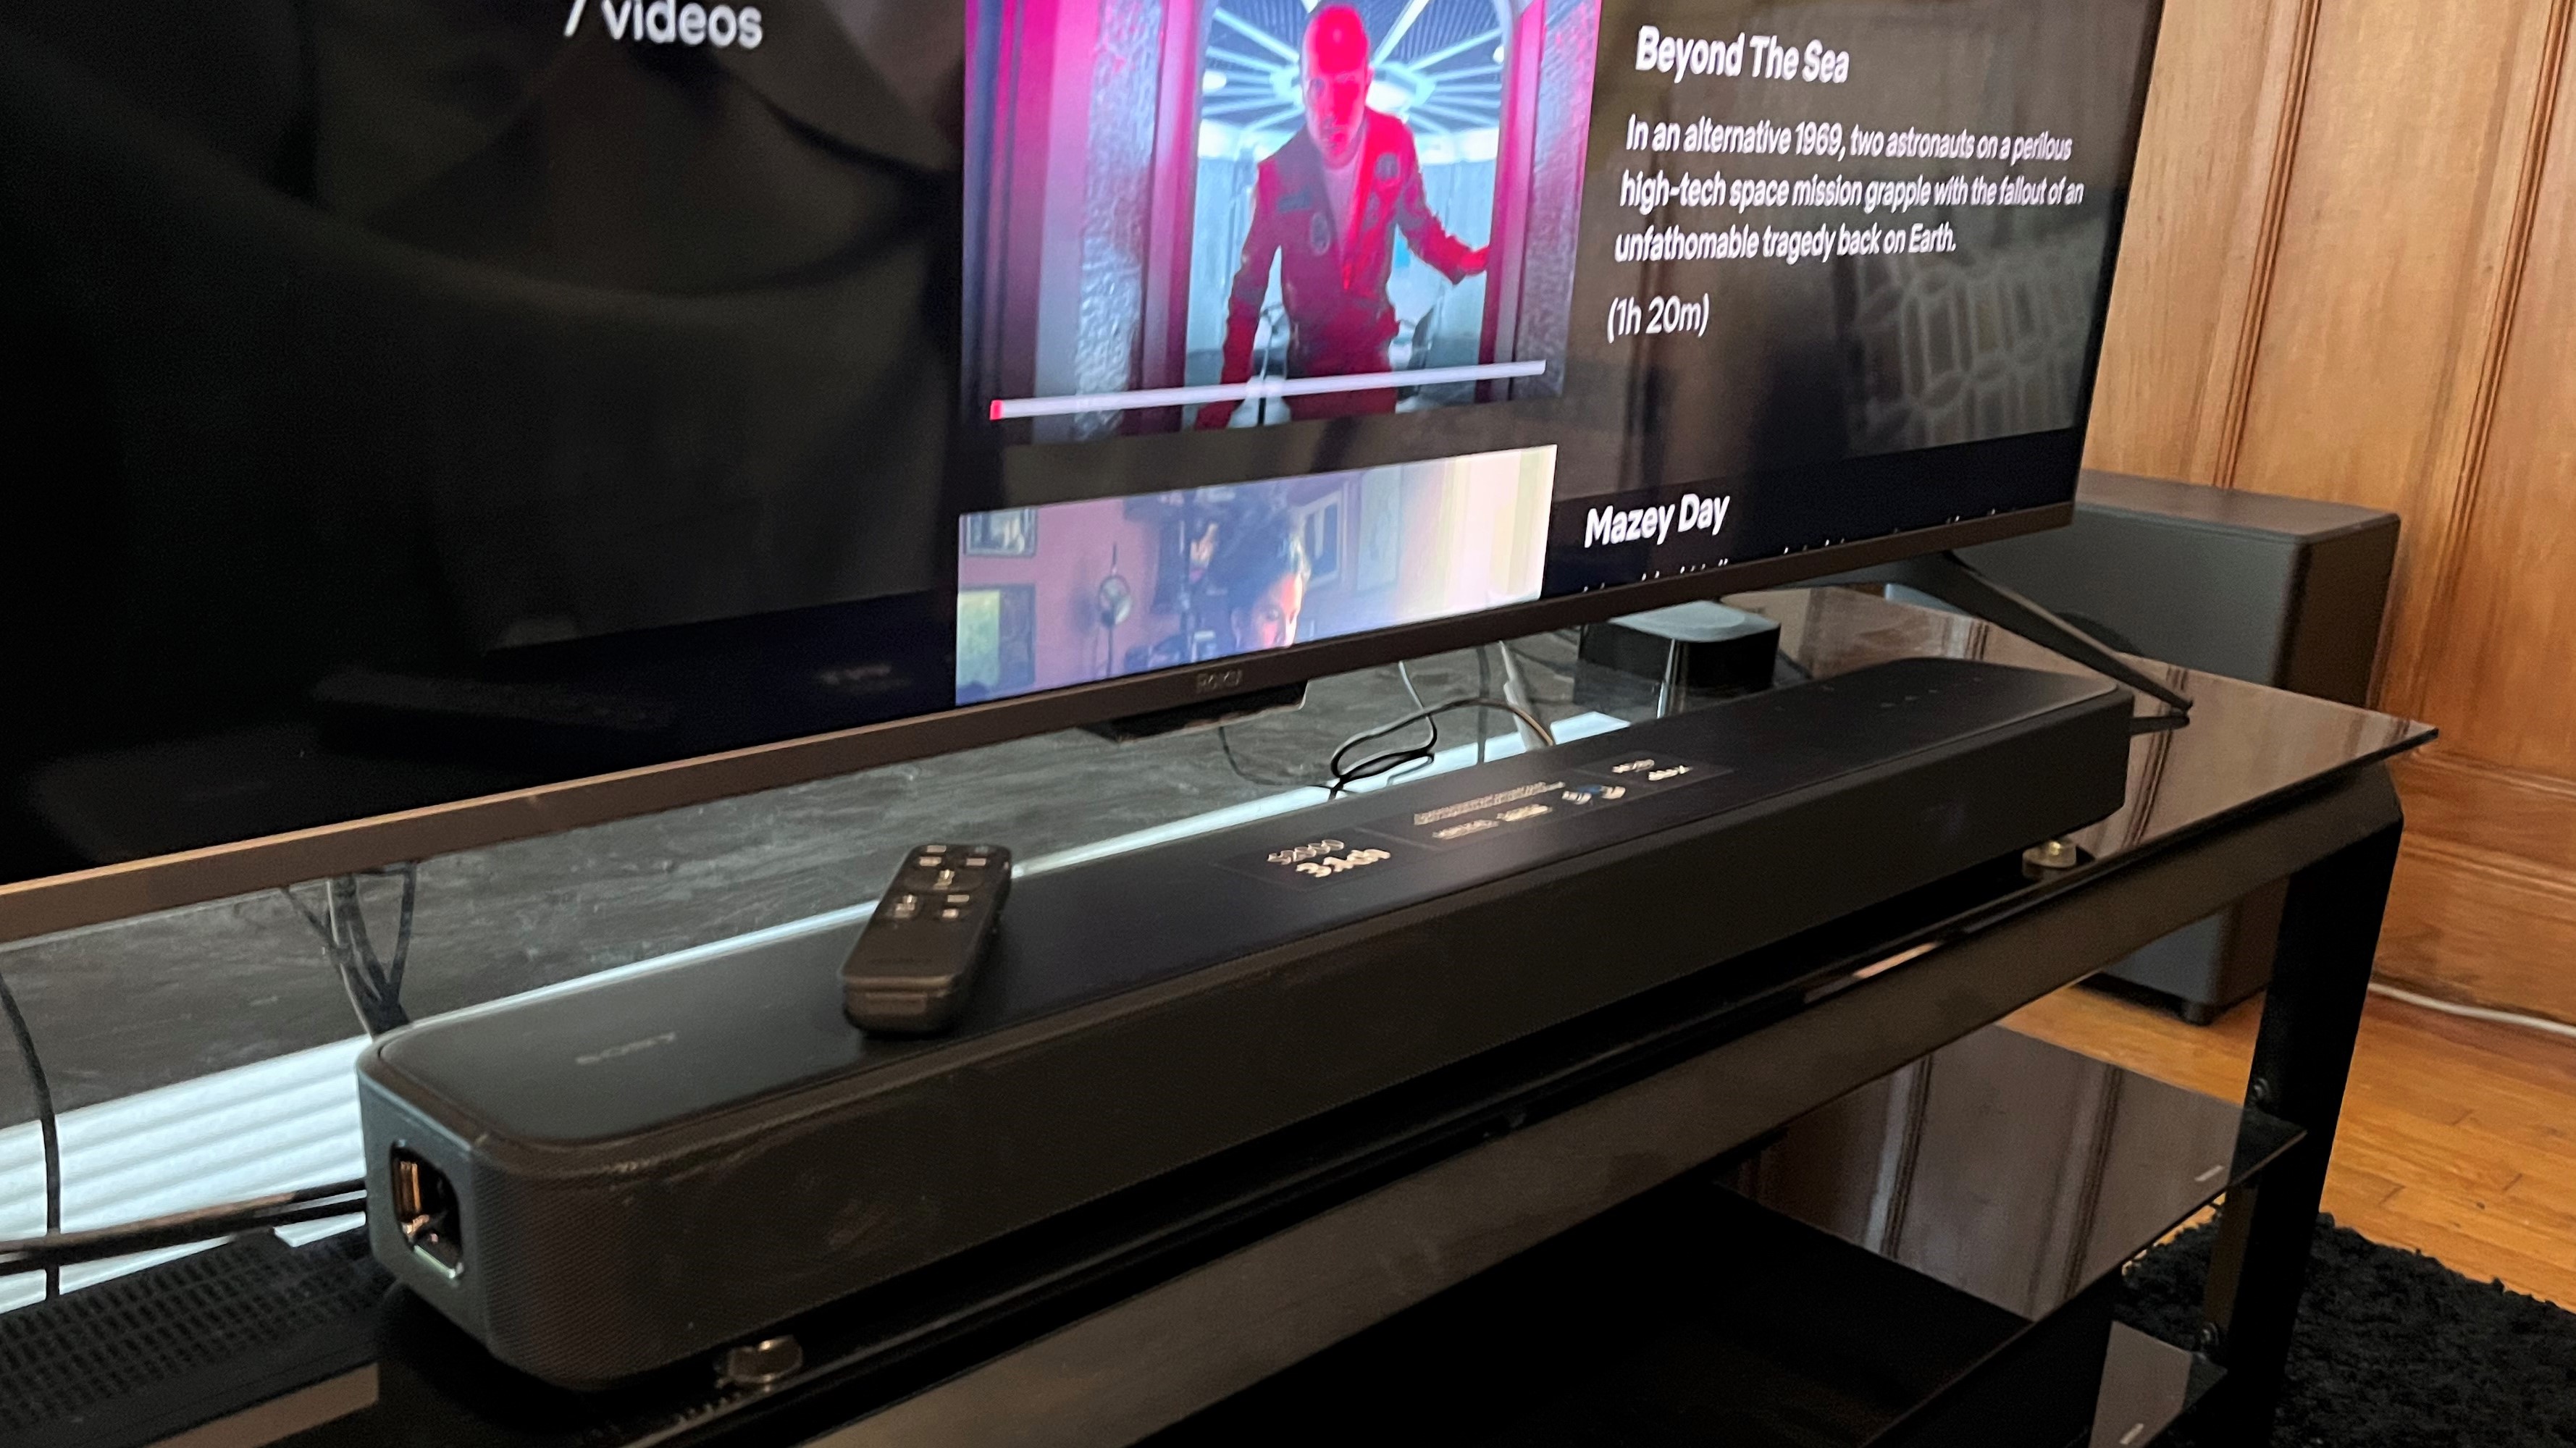 Sony HT-S2000 soundbar on TV stand with Netflix Black Mirror menu in background